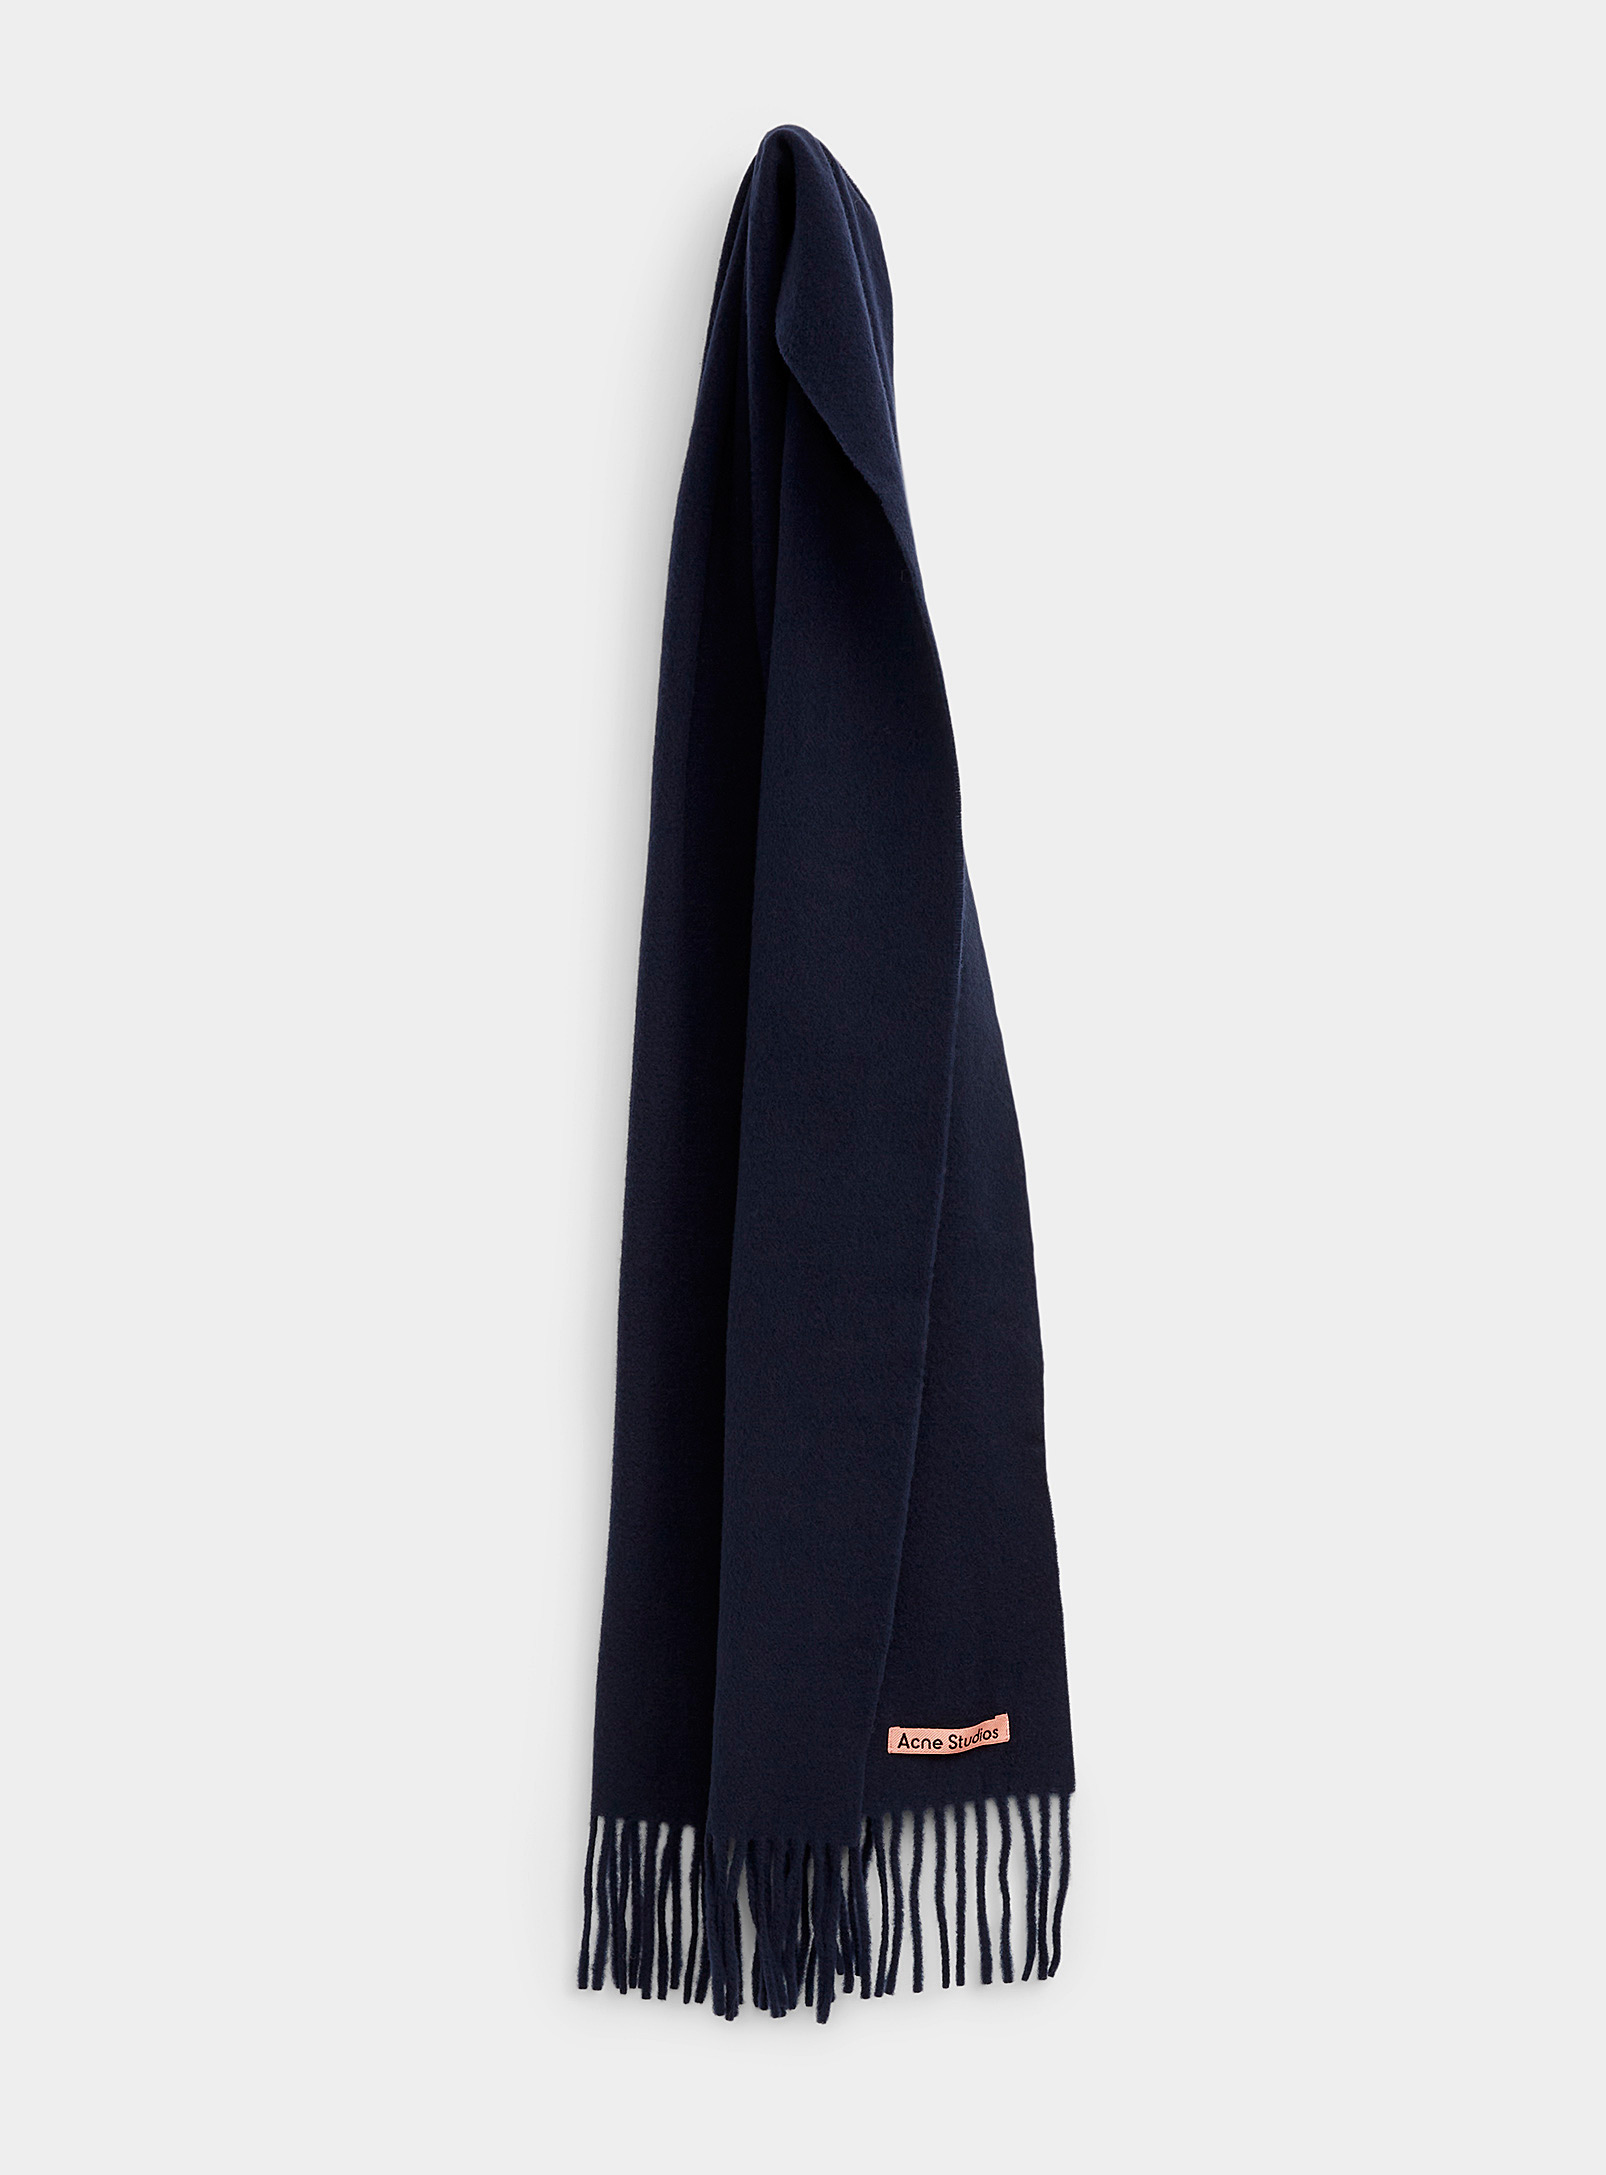 Acne Studios - Women's Slim fringed navy scarf